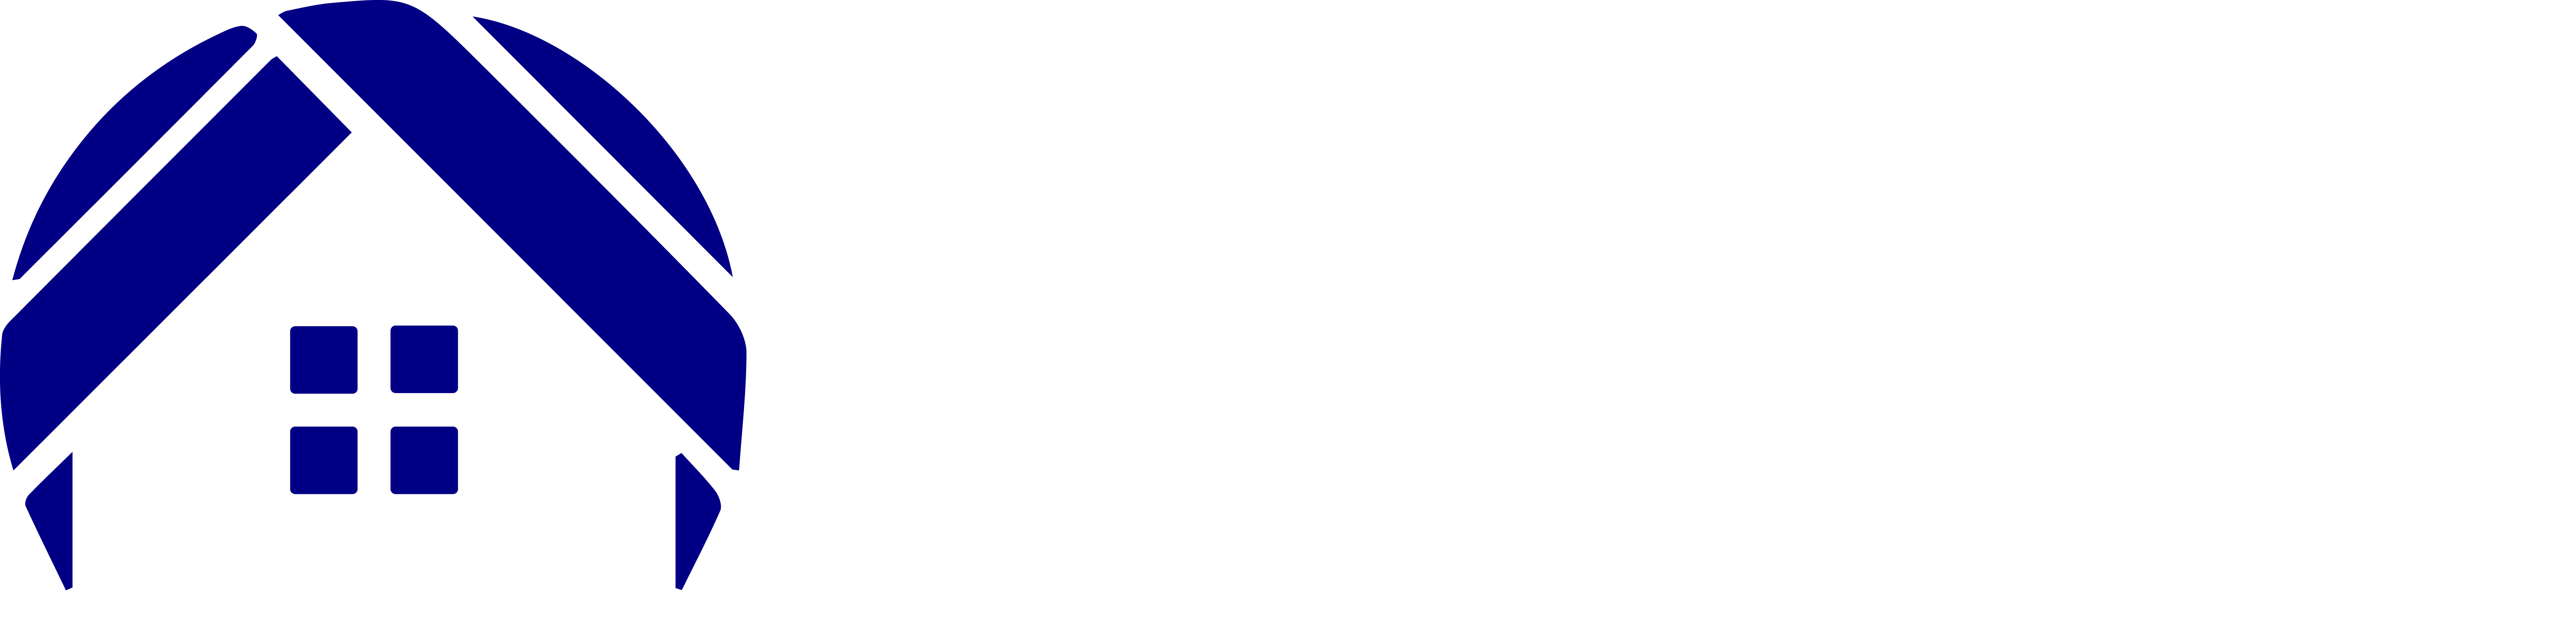 el logotipo de la empresa